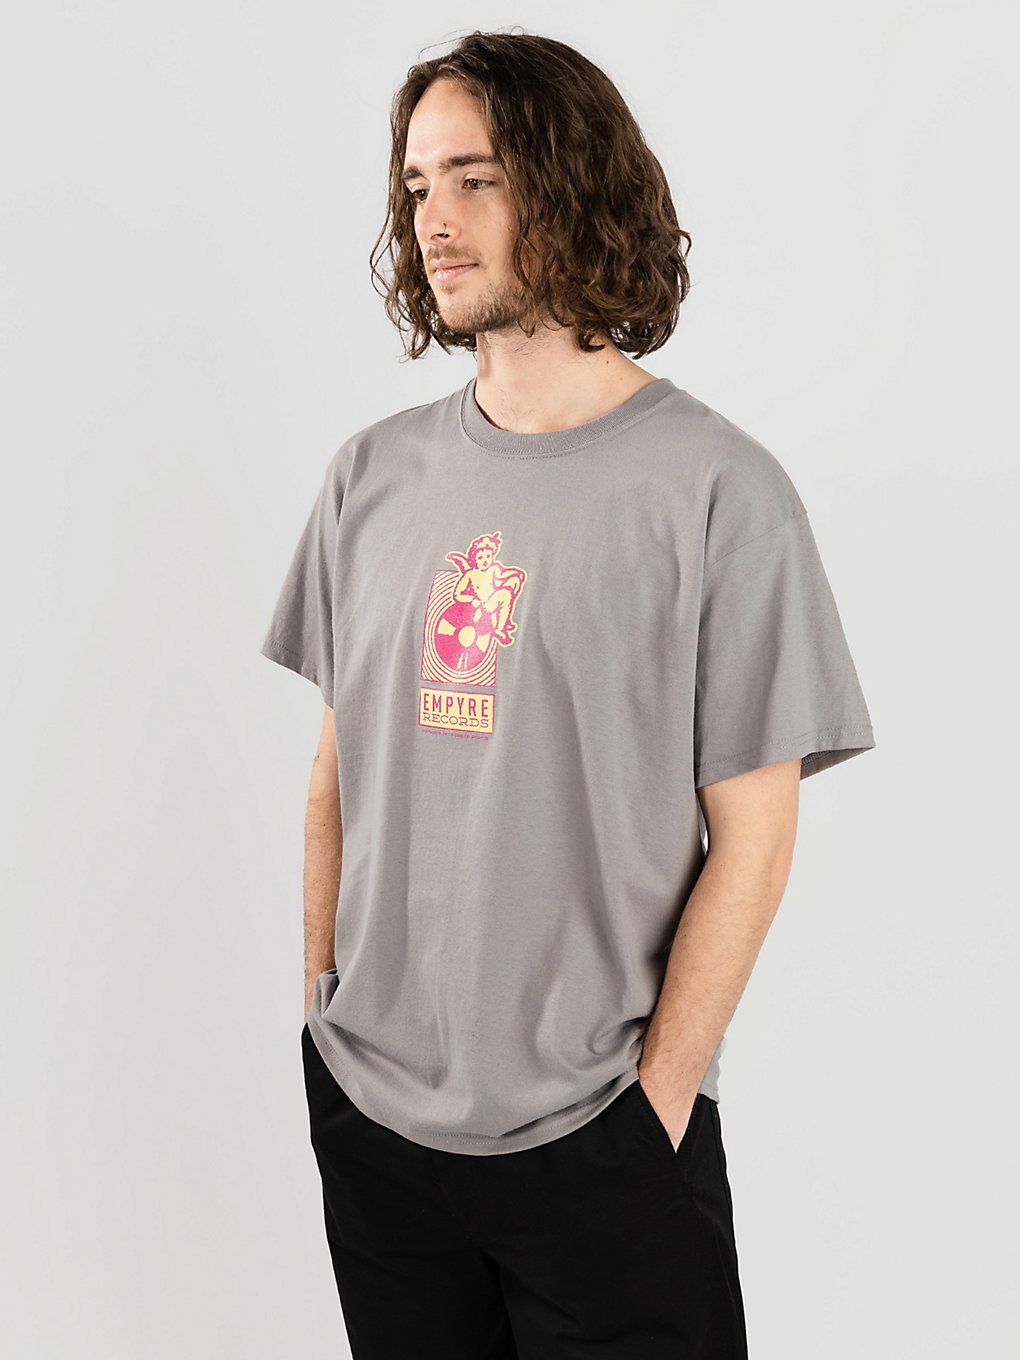 Empyre Records T-Shirt gray kaufen